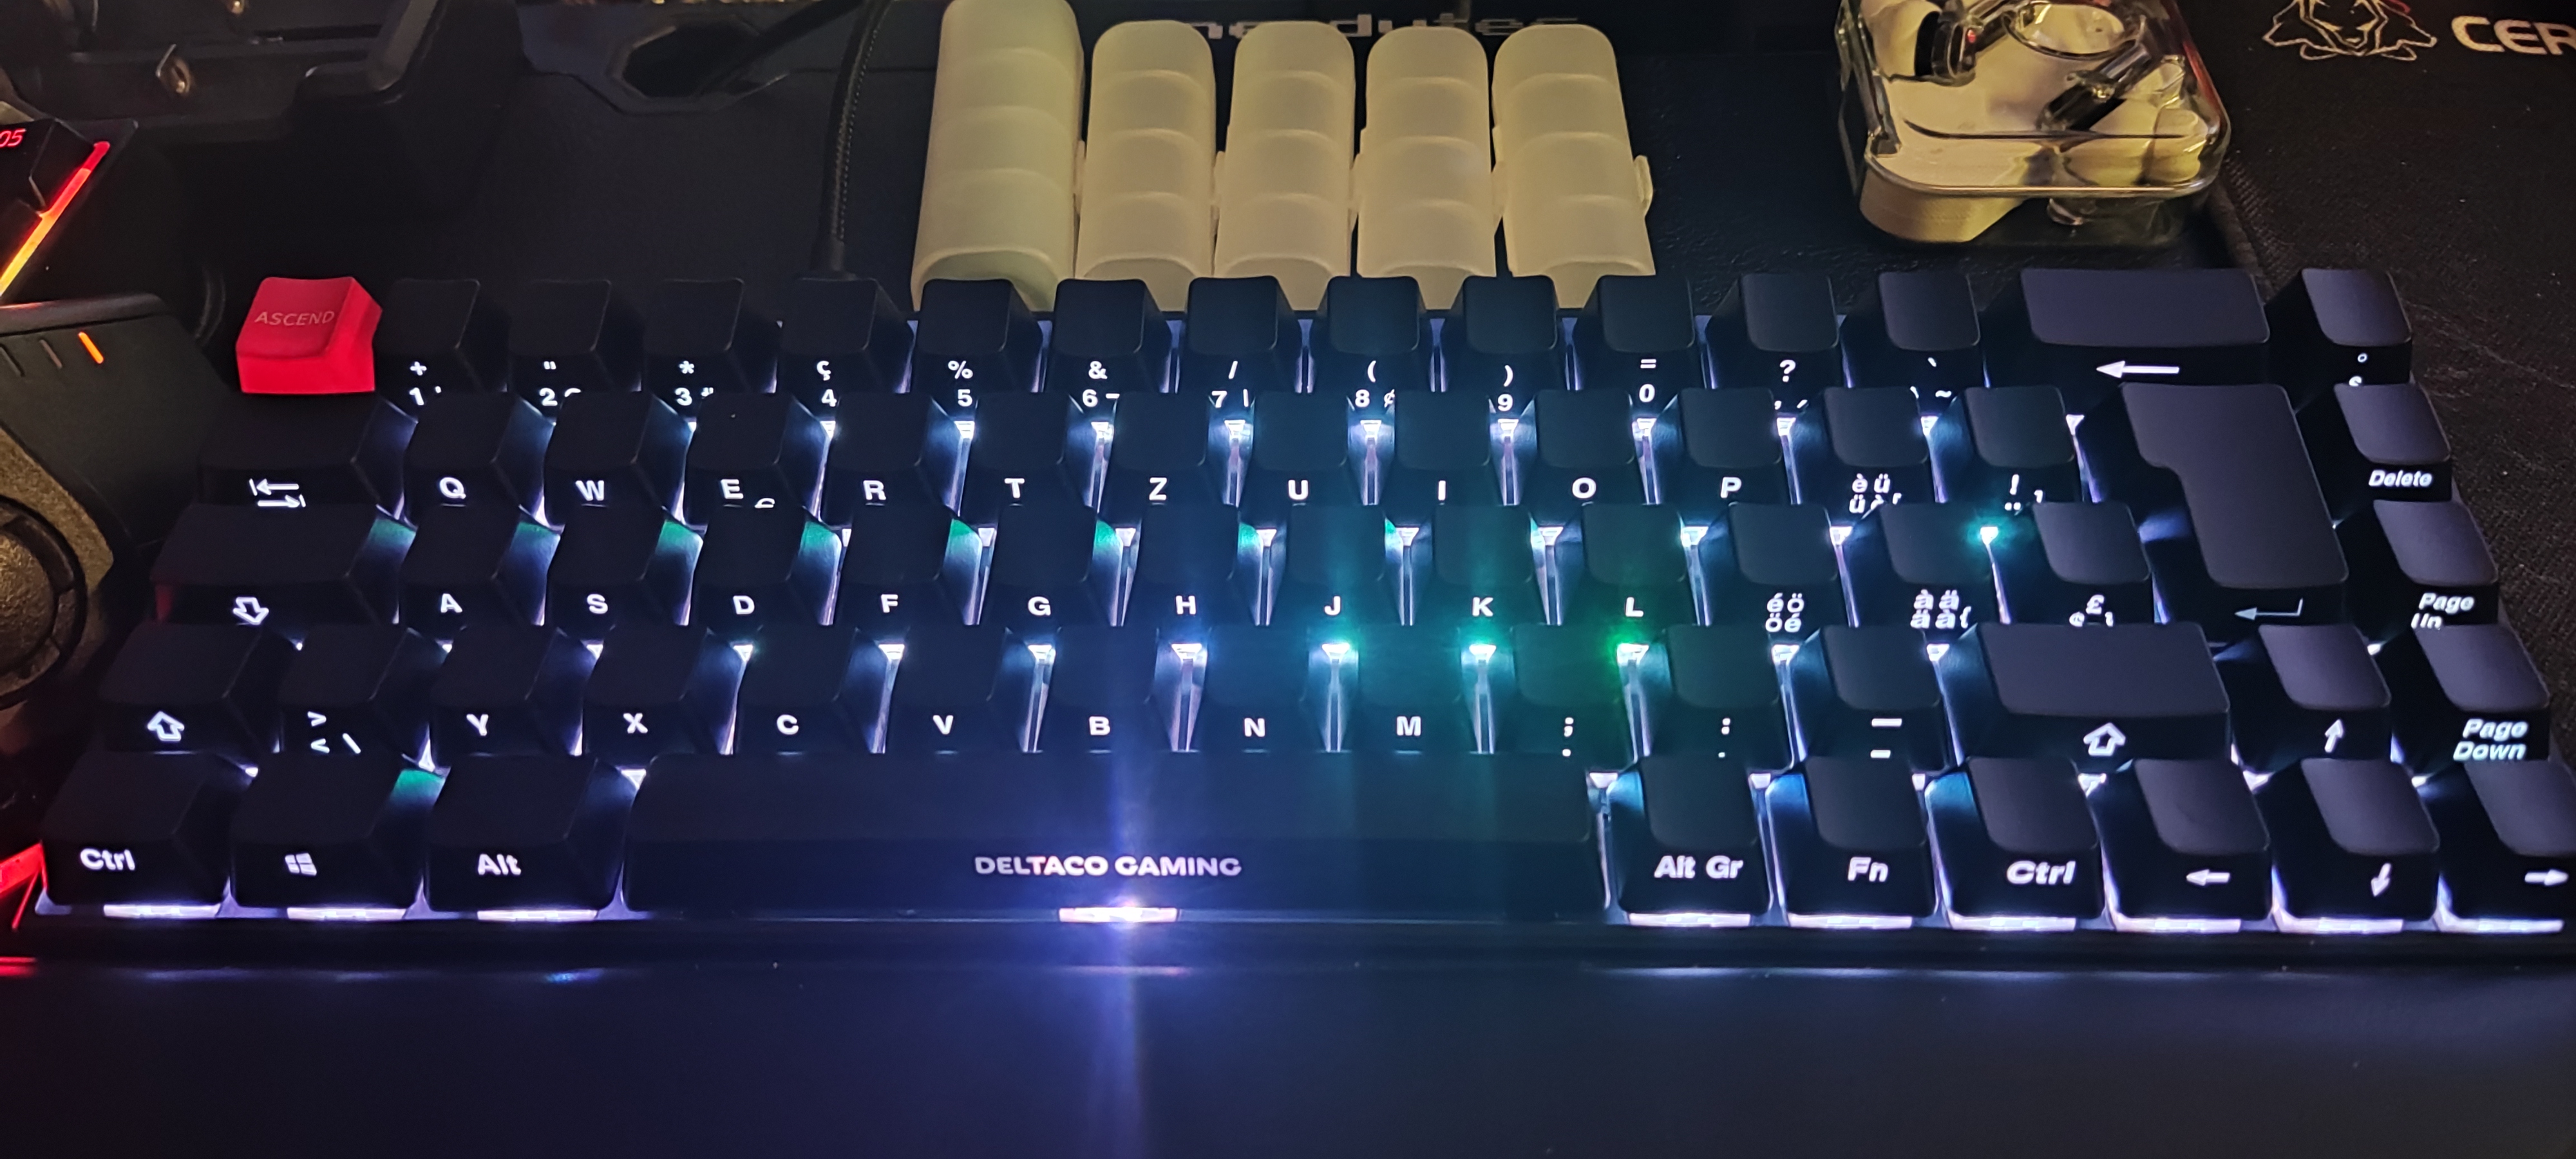 Apex 9 Mini | Mini gaming keyboard with fast optical switches